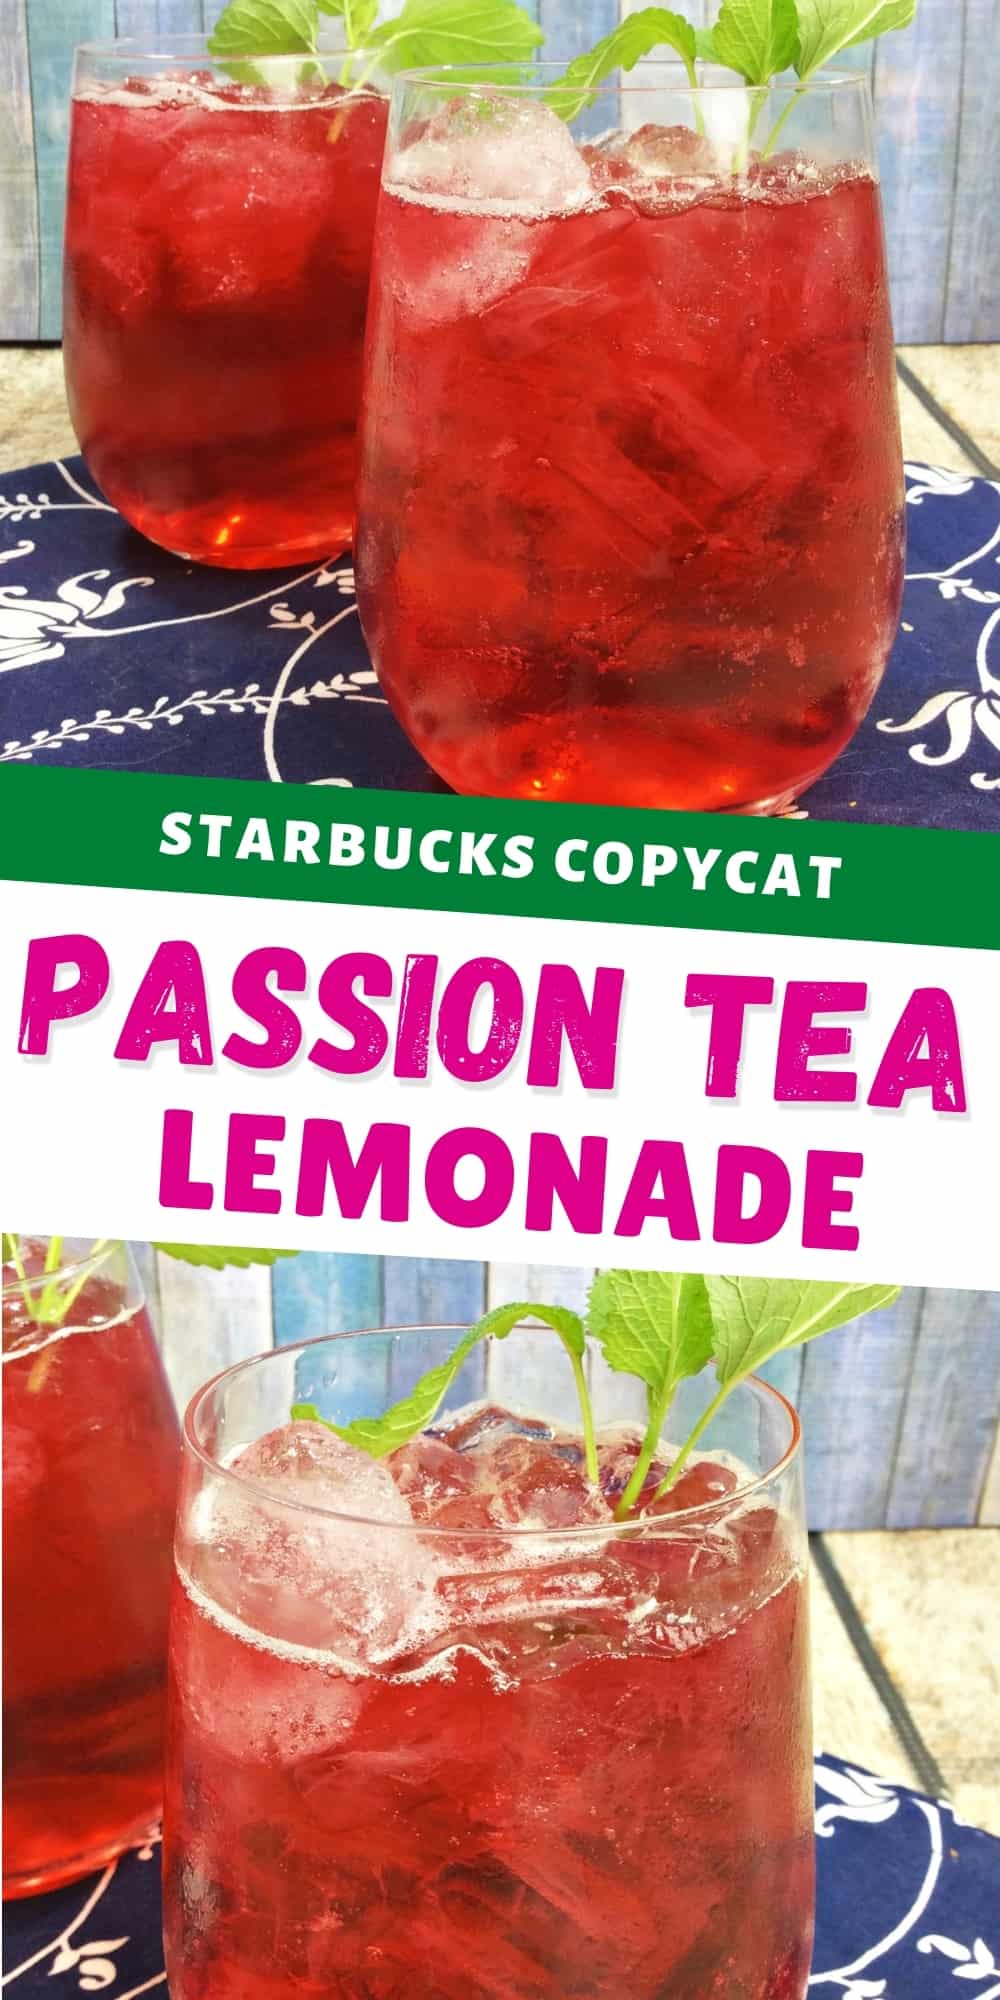 Starbucks Copycat Passion Tea Lemonade